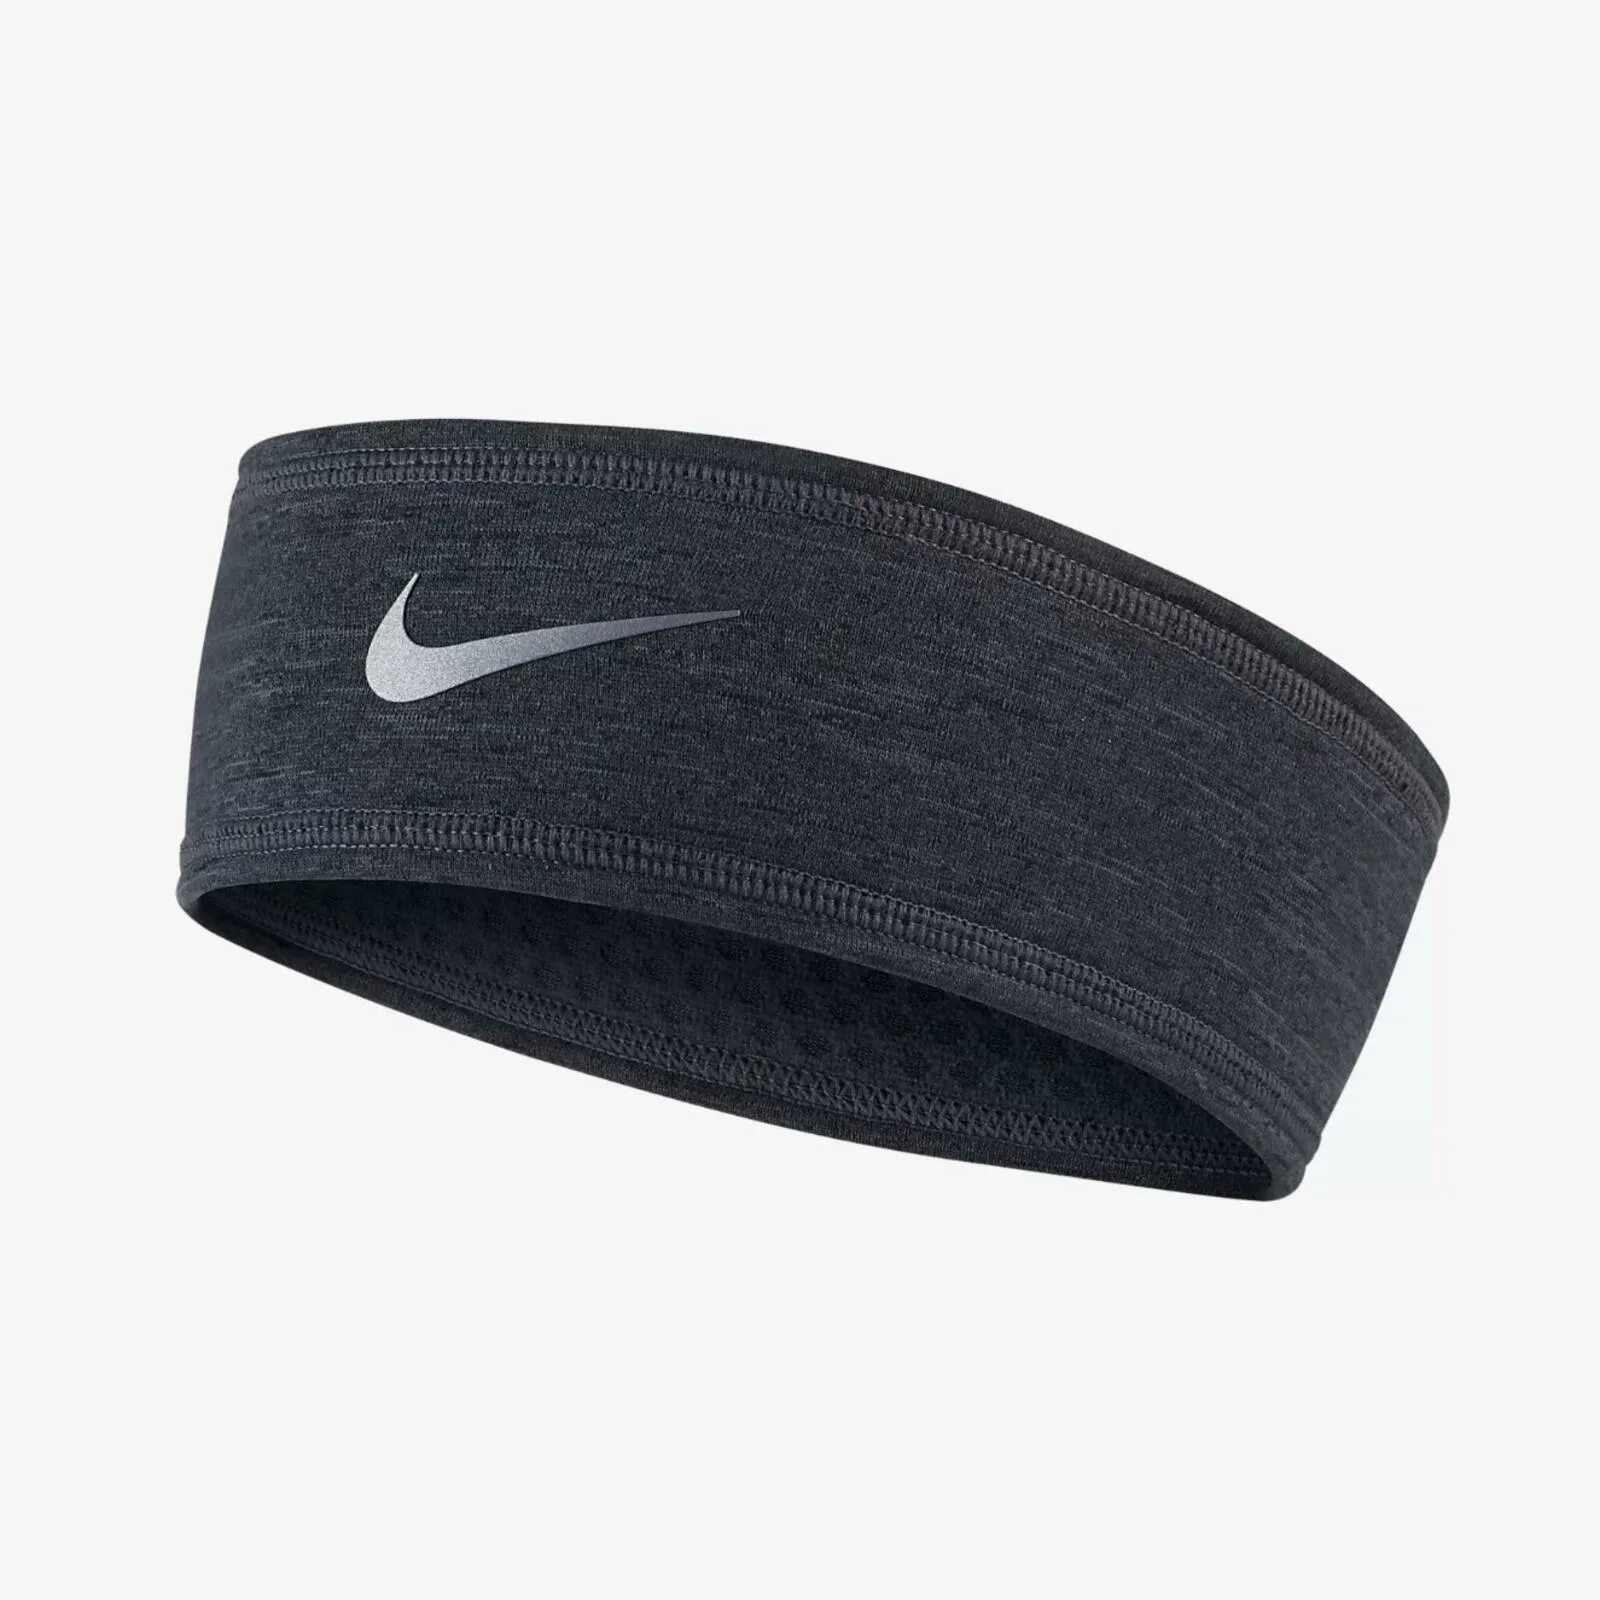 Найк на голову. Headband Nike. Nike Running Headband. Nike Therma Fit повязка на голову. Повязка найк черная.